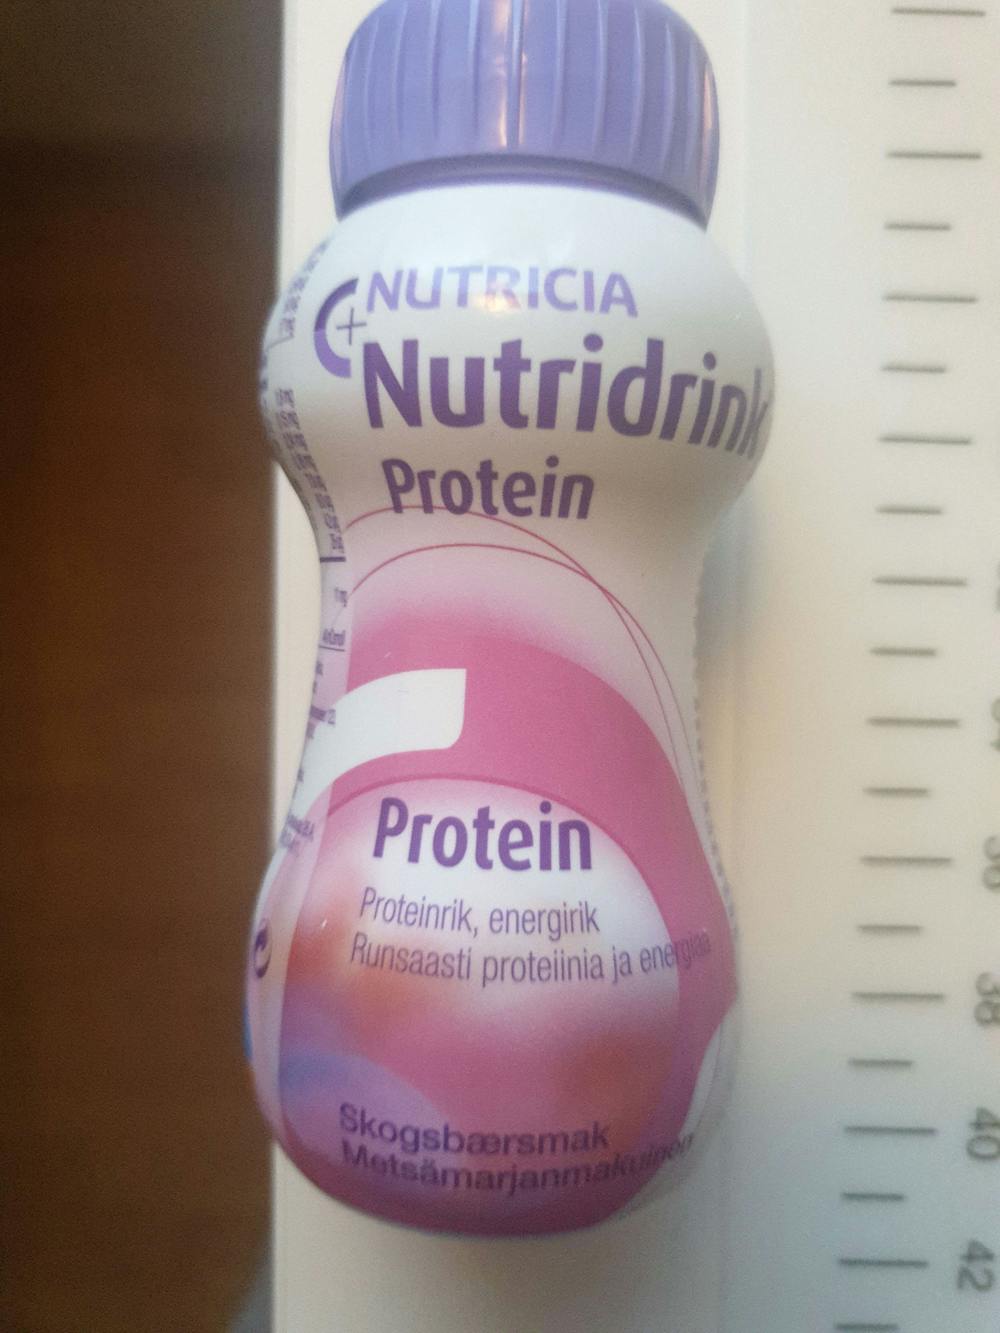 Nutridrink protein, skogsbærsmak, Nutricia